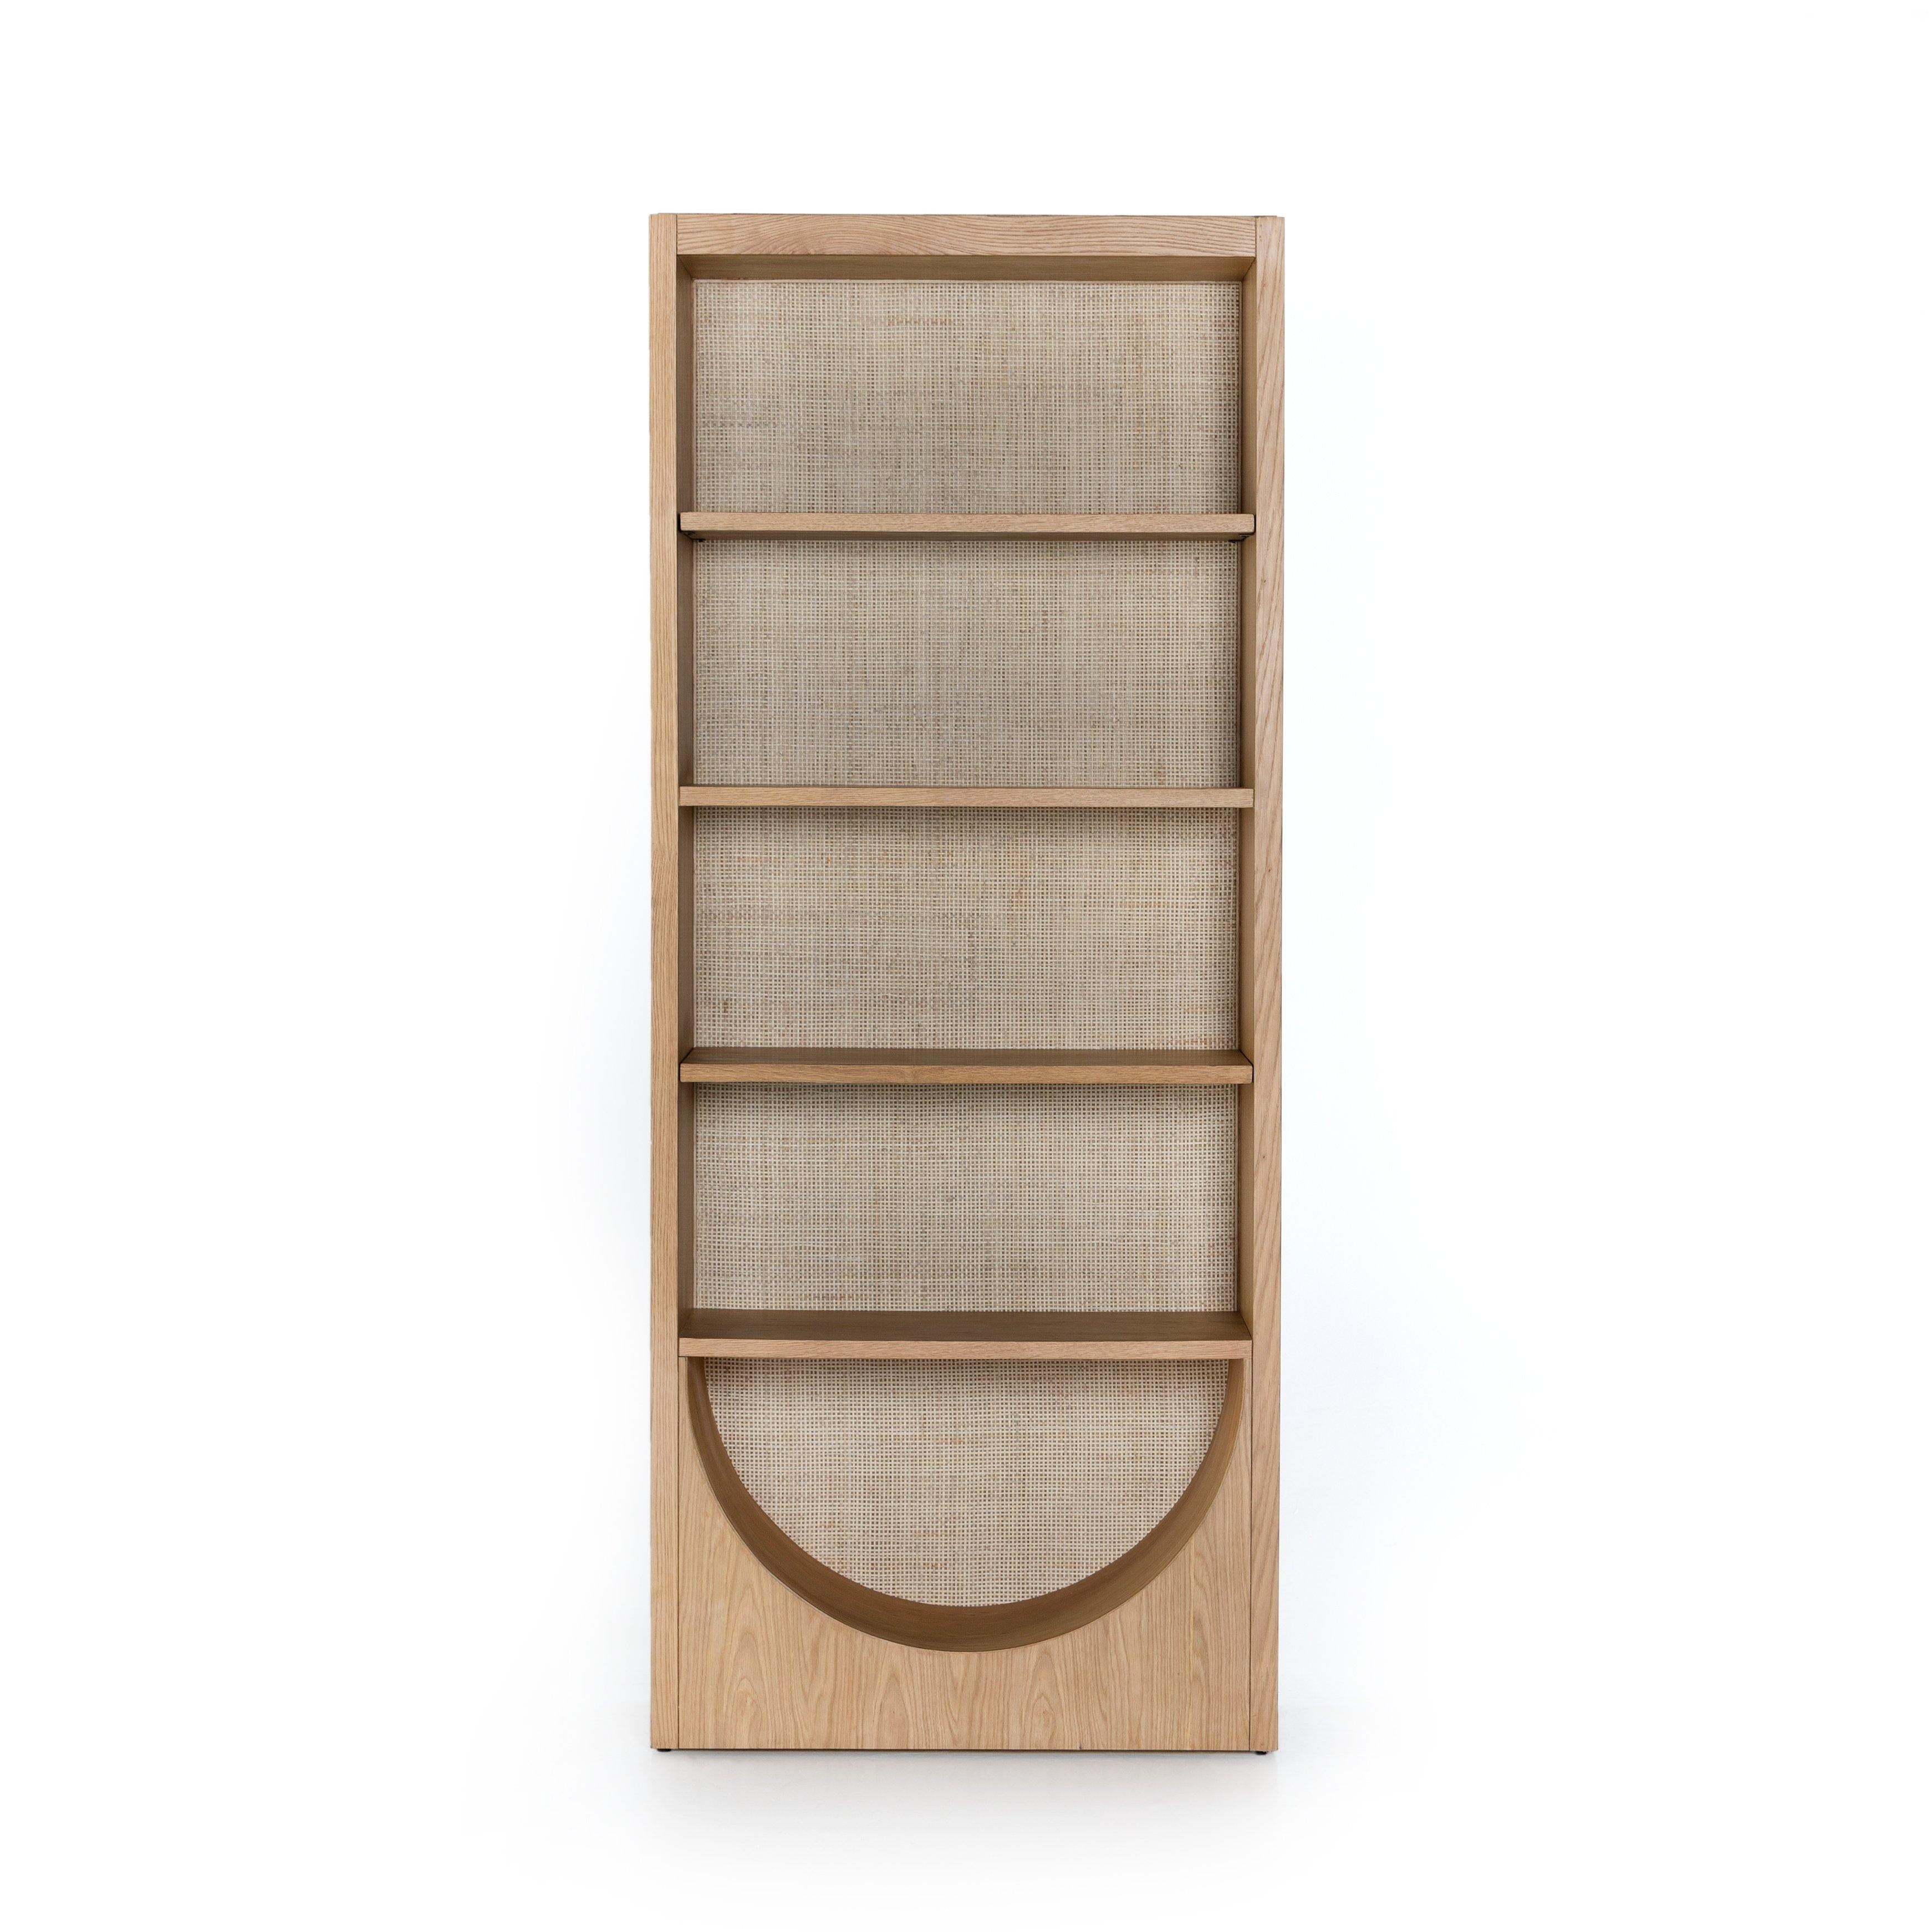 Higgs Oak Bookcase - Reimagine Designs - Bookcases